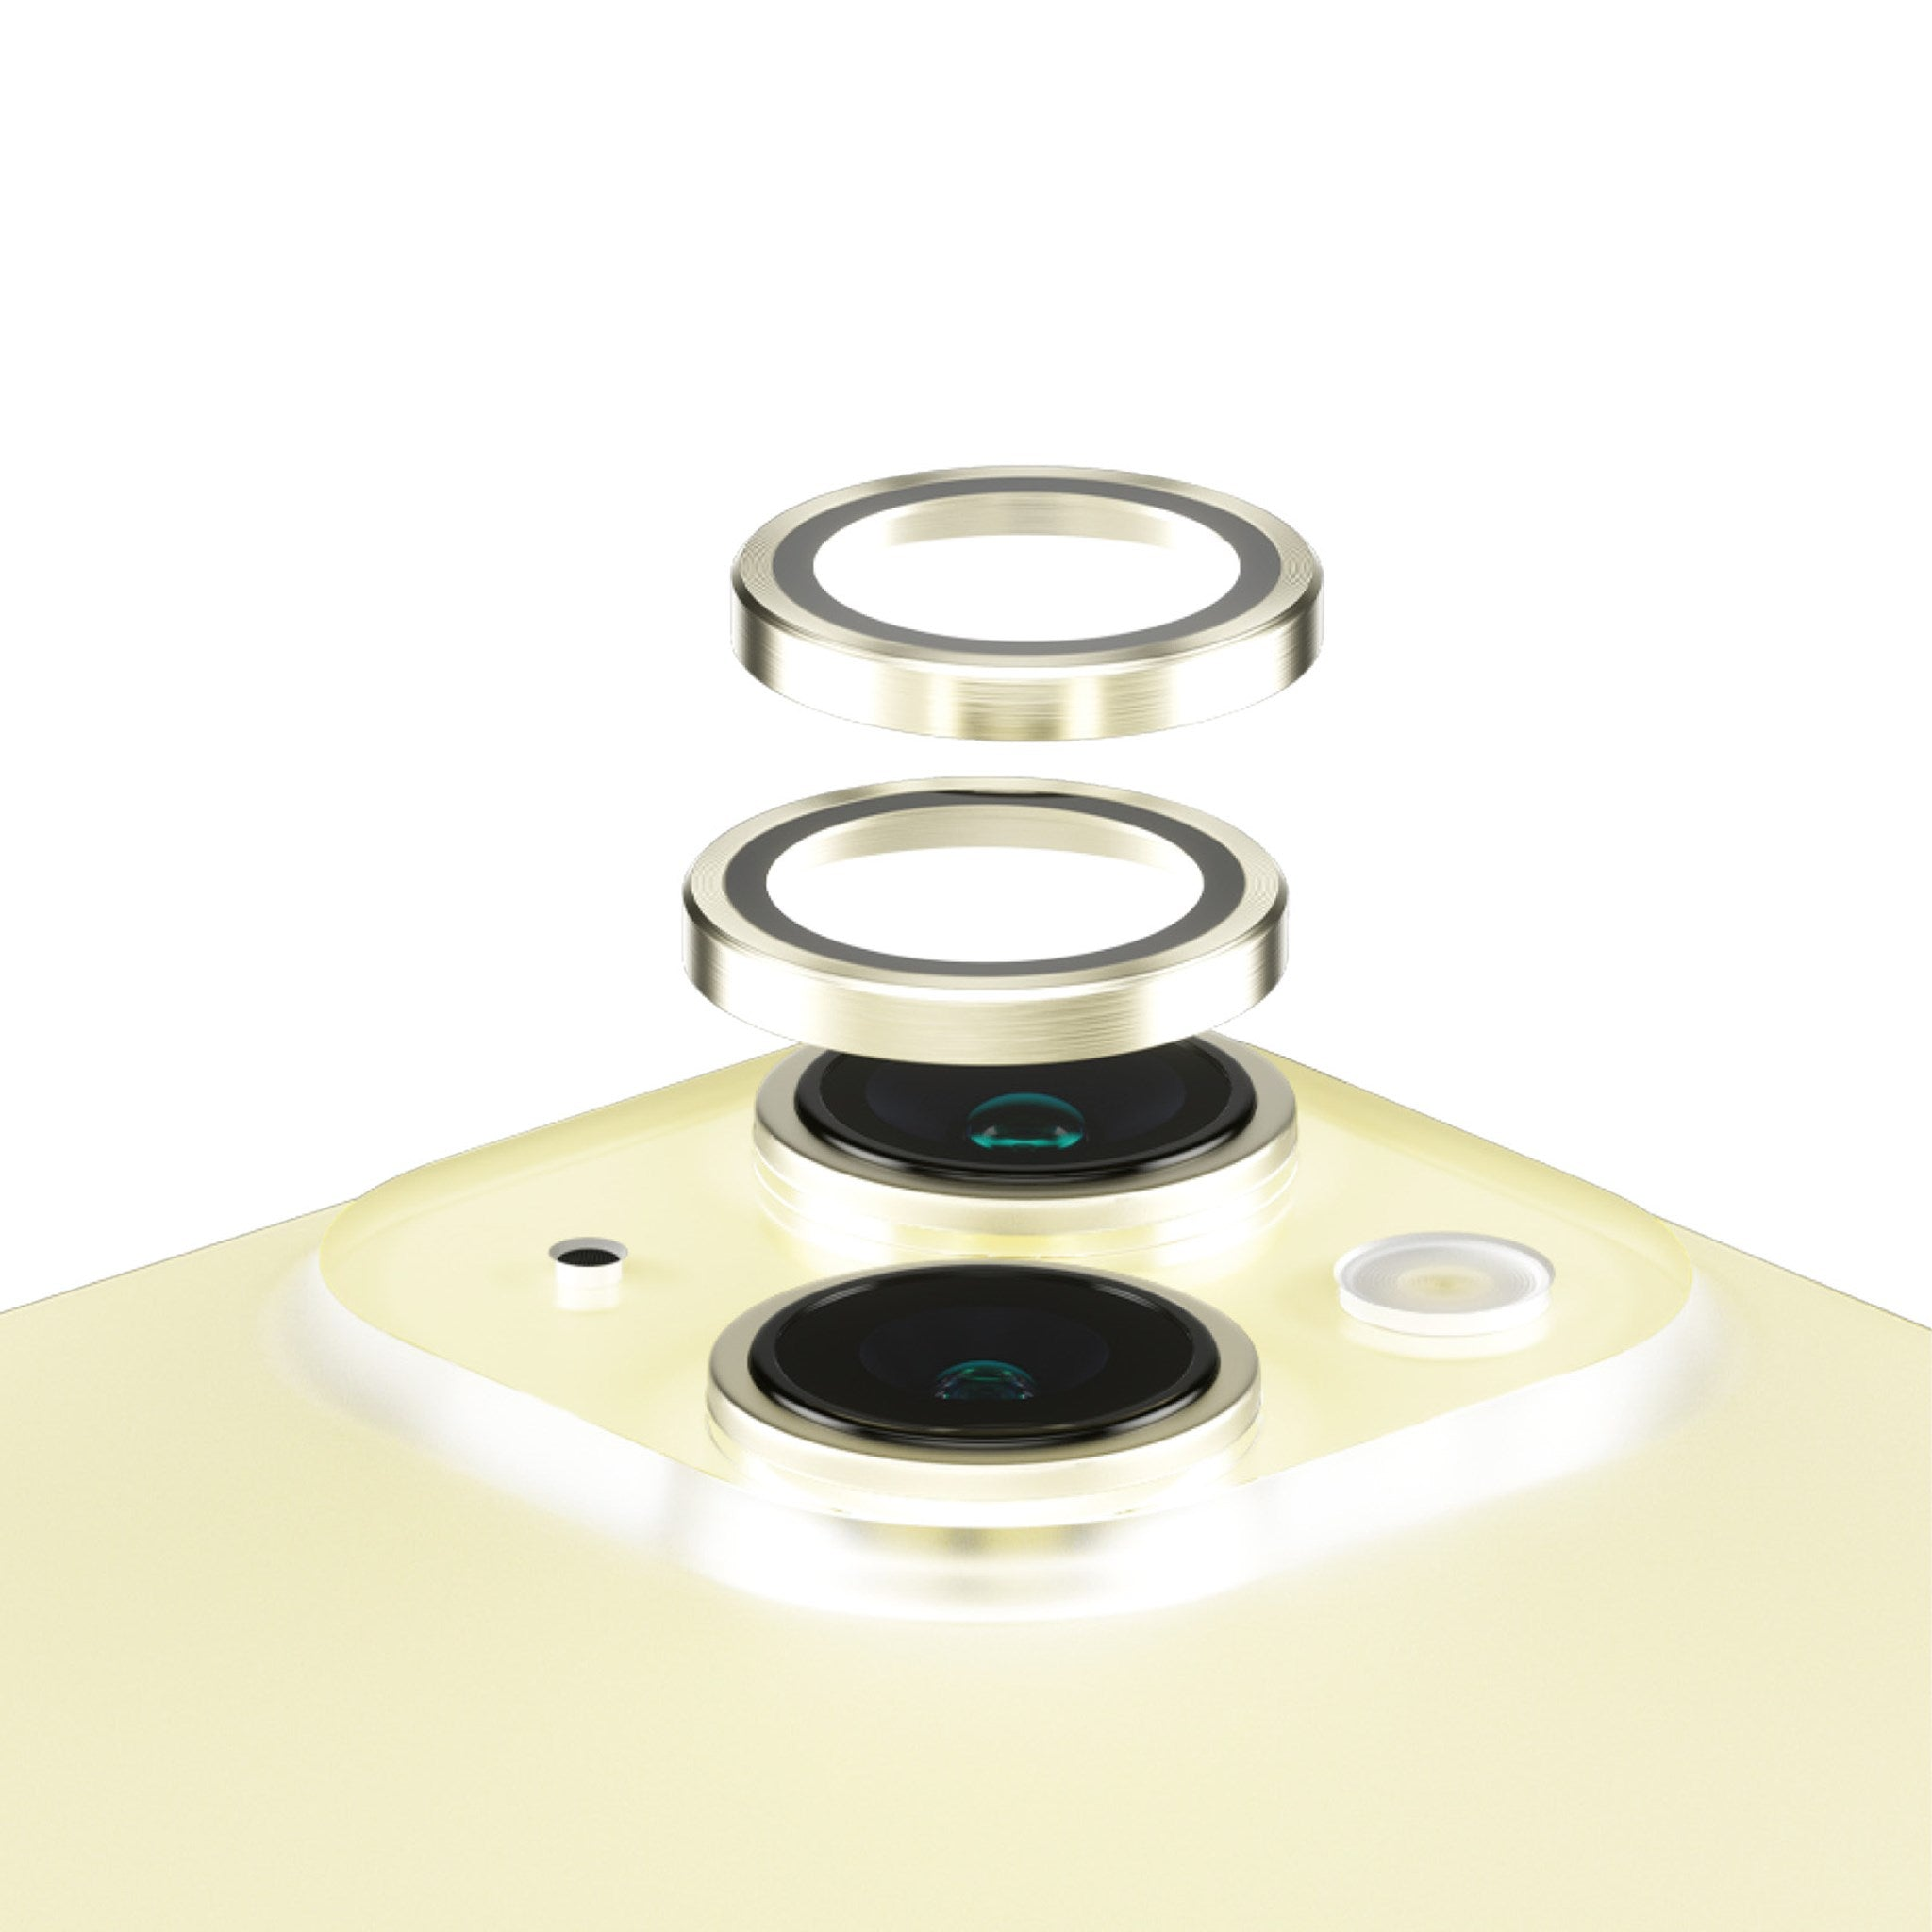 Gelb Hoops™ Apple | Plus) | PANZERGLASS 15 iPhone Kameraschutz Kameraschutz(für 15